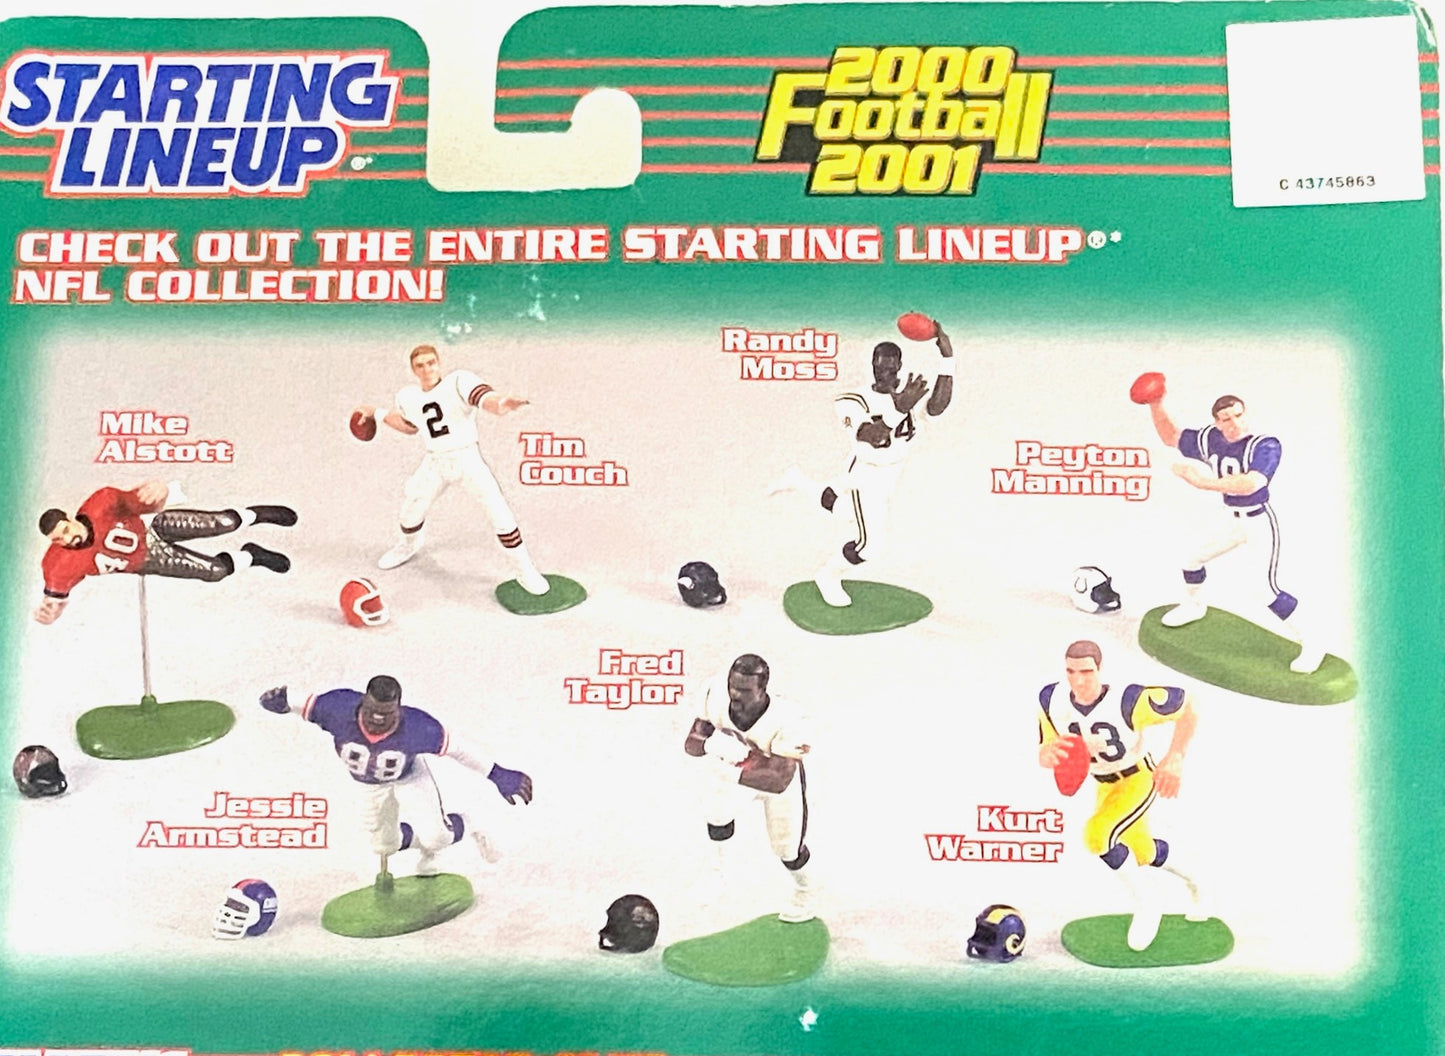 Takeo Spikes 2000-01 NFL Cincinnati Bengals Starting Lineup Figurine (New) by Hasbro